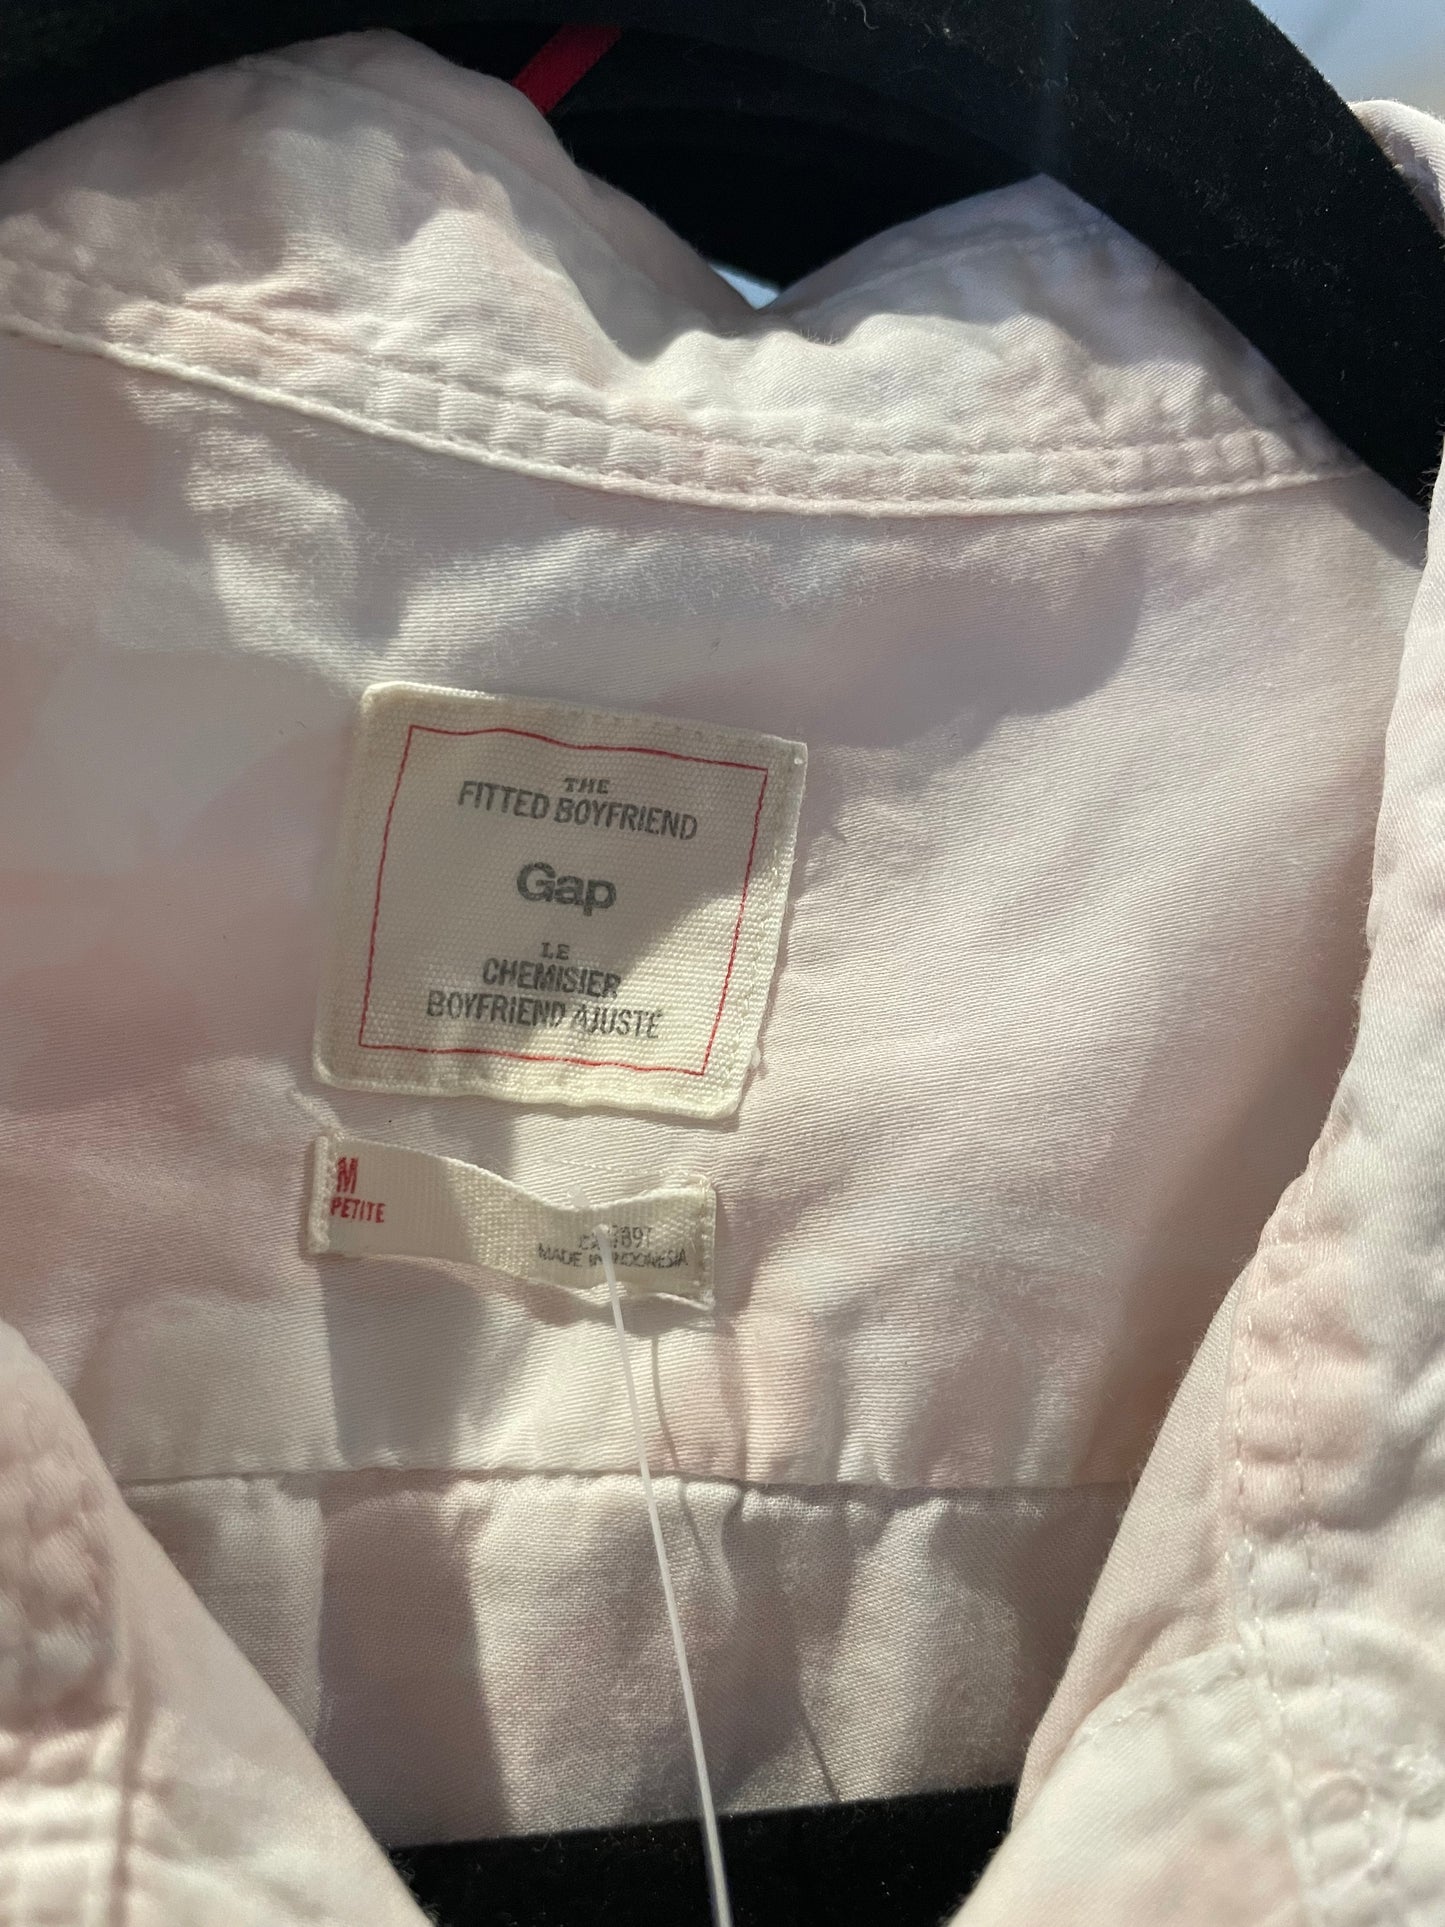 GAP Sunwashed Light Pink Tropical Print 100% Cotton Fitted Boyfriend Button Up Shirt - Medium Petite